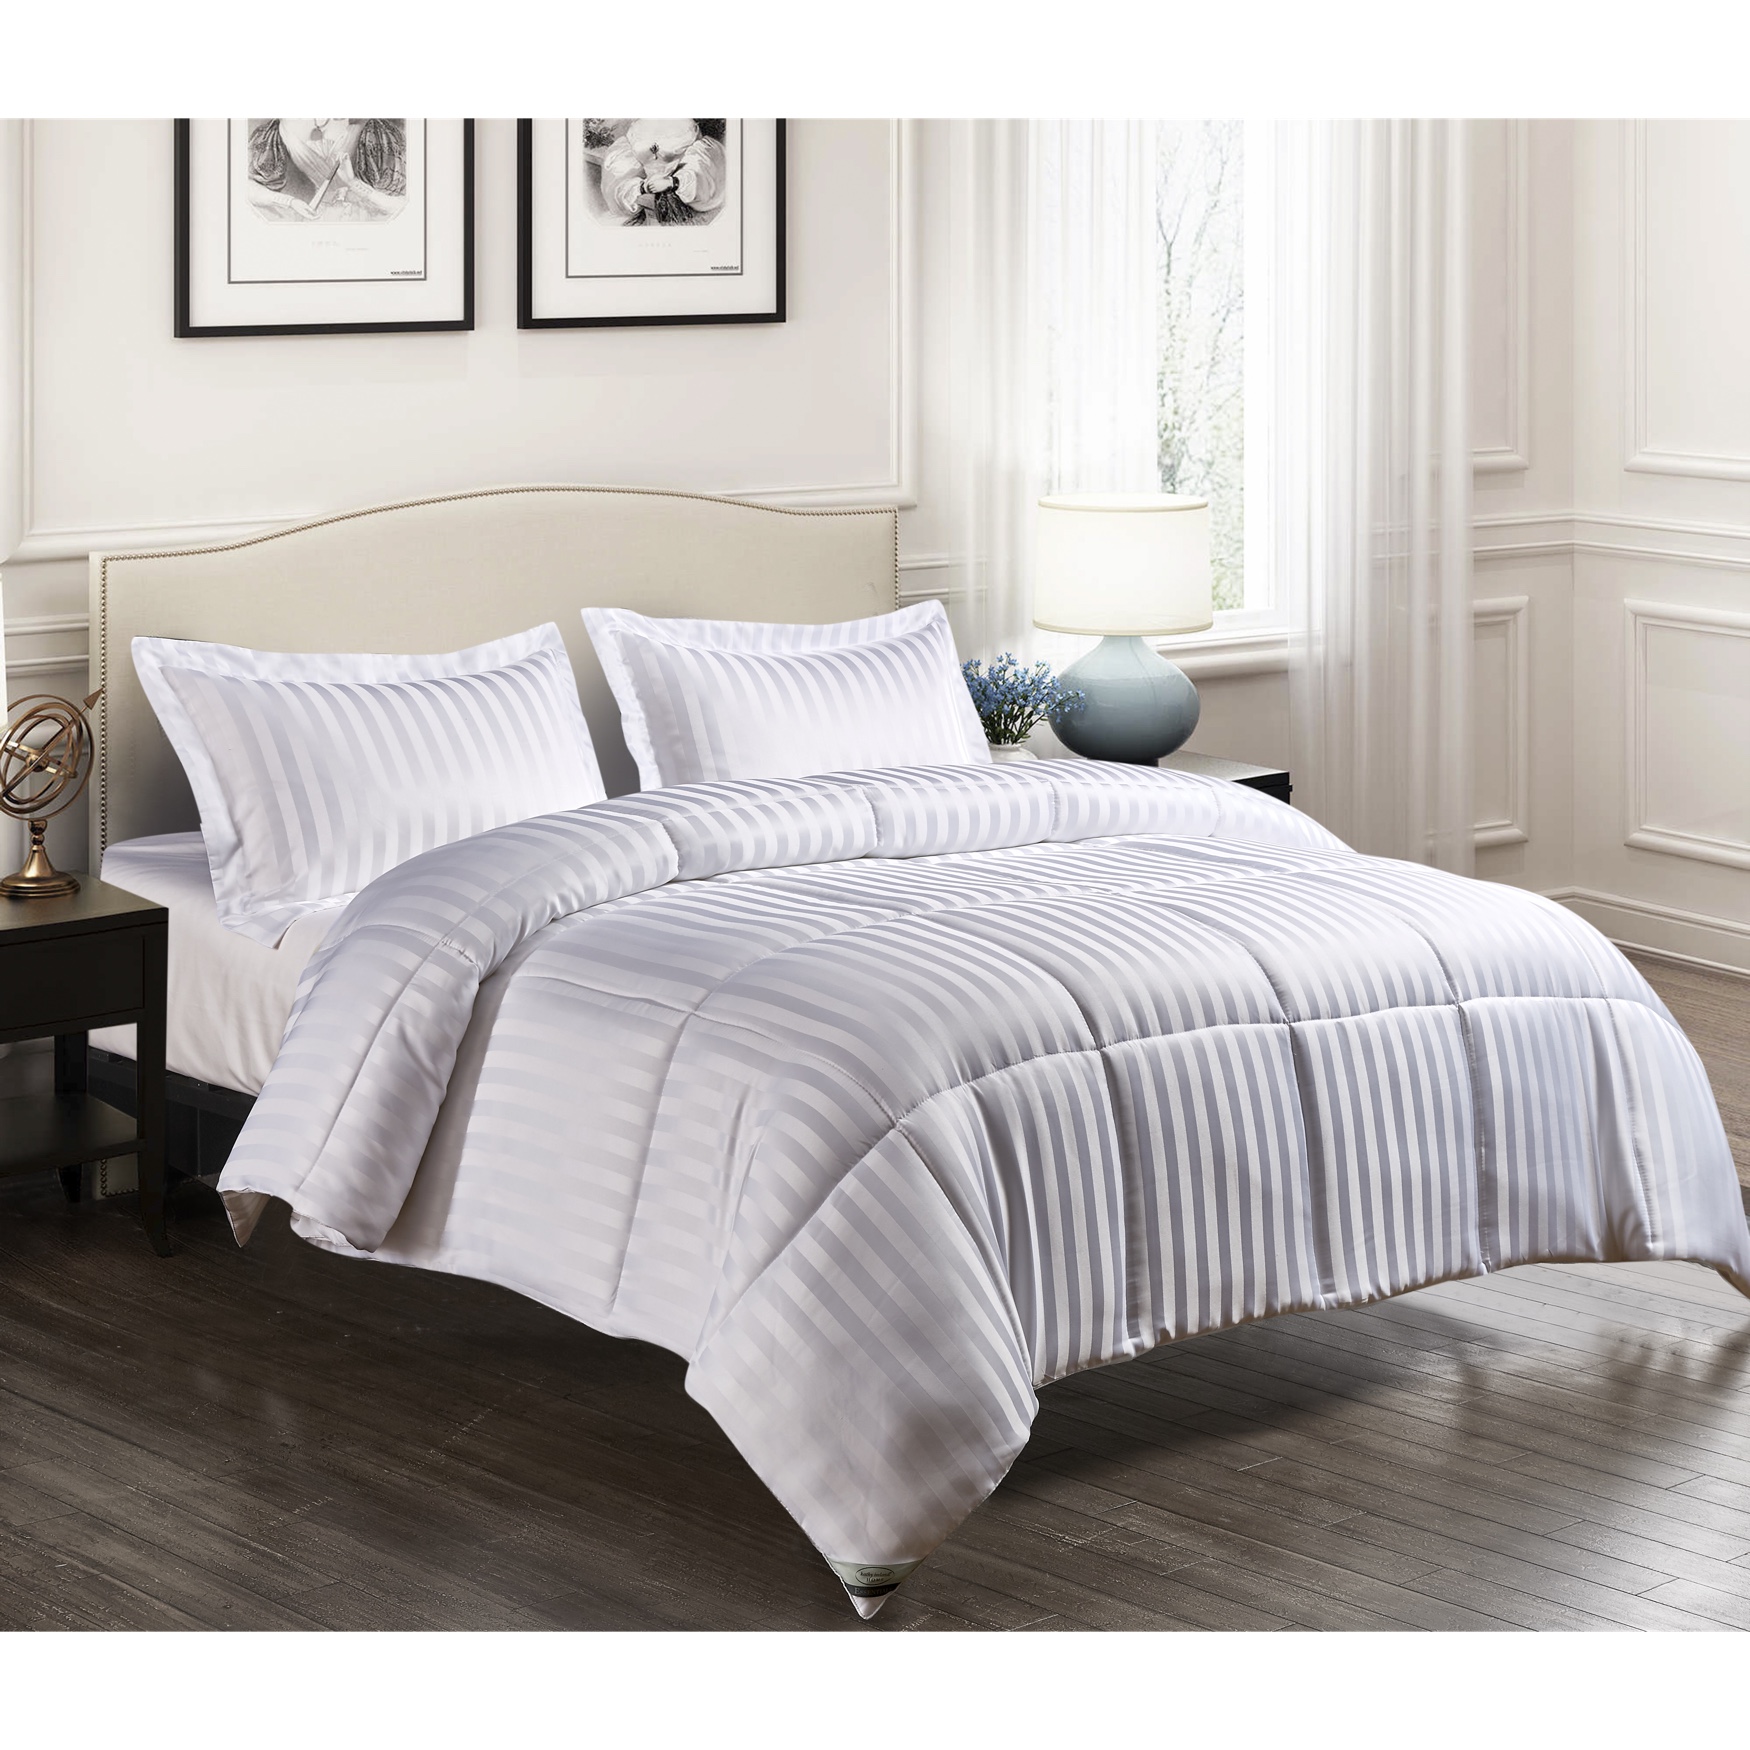 Kathy Ireland 3-Pc Reversible Down Alternative Comforter, White Beding, 